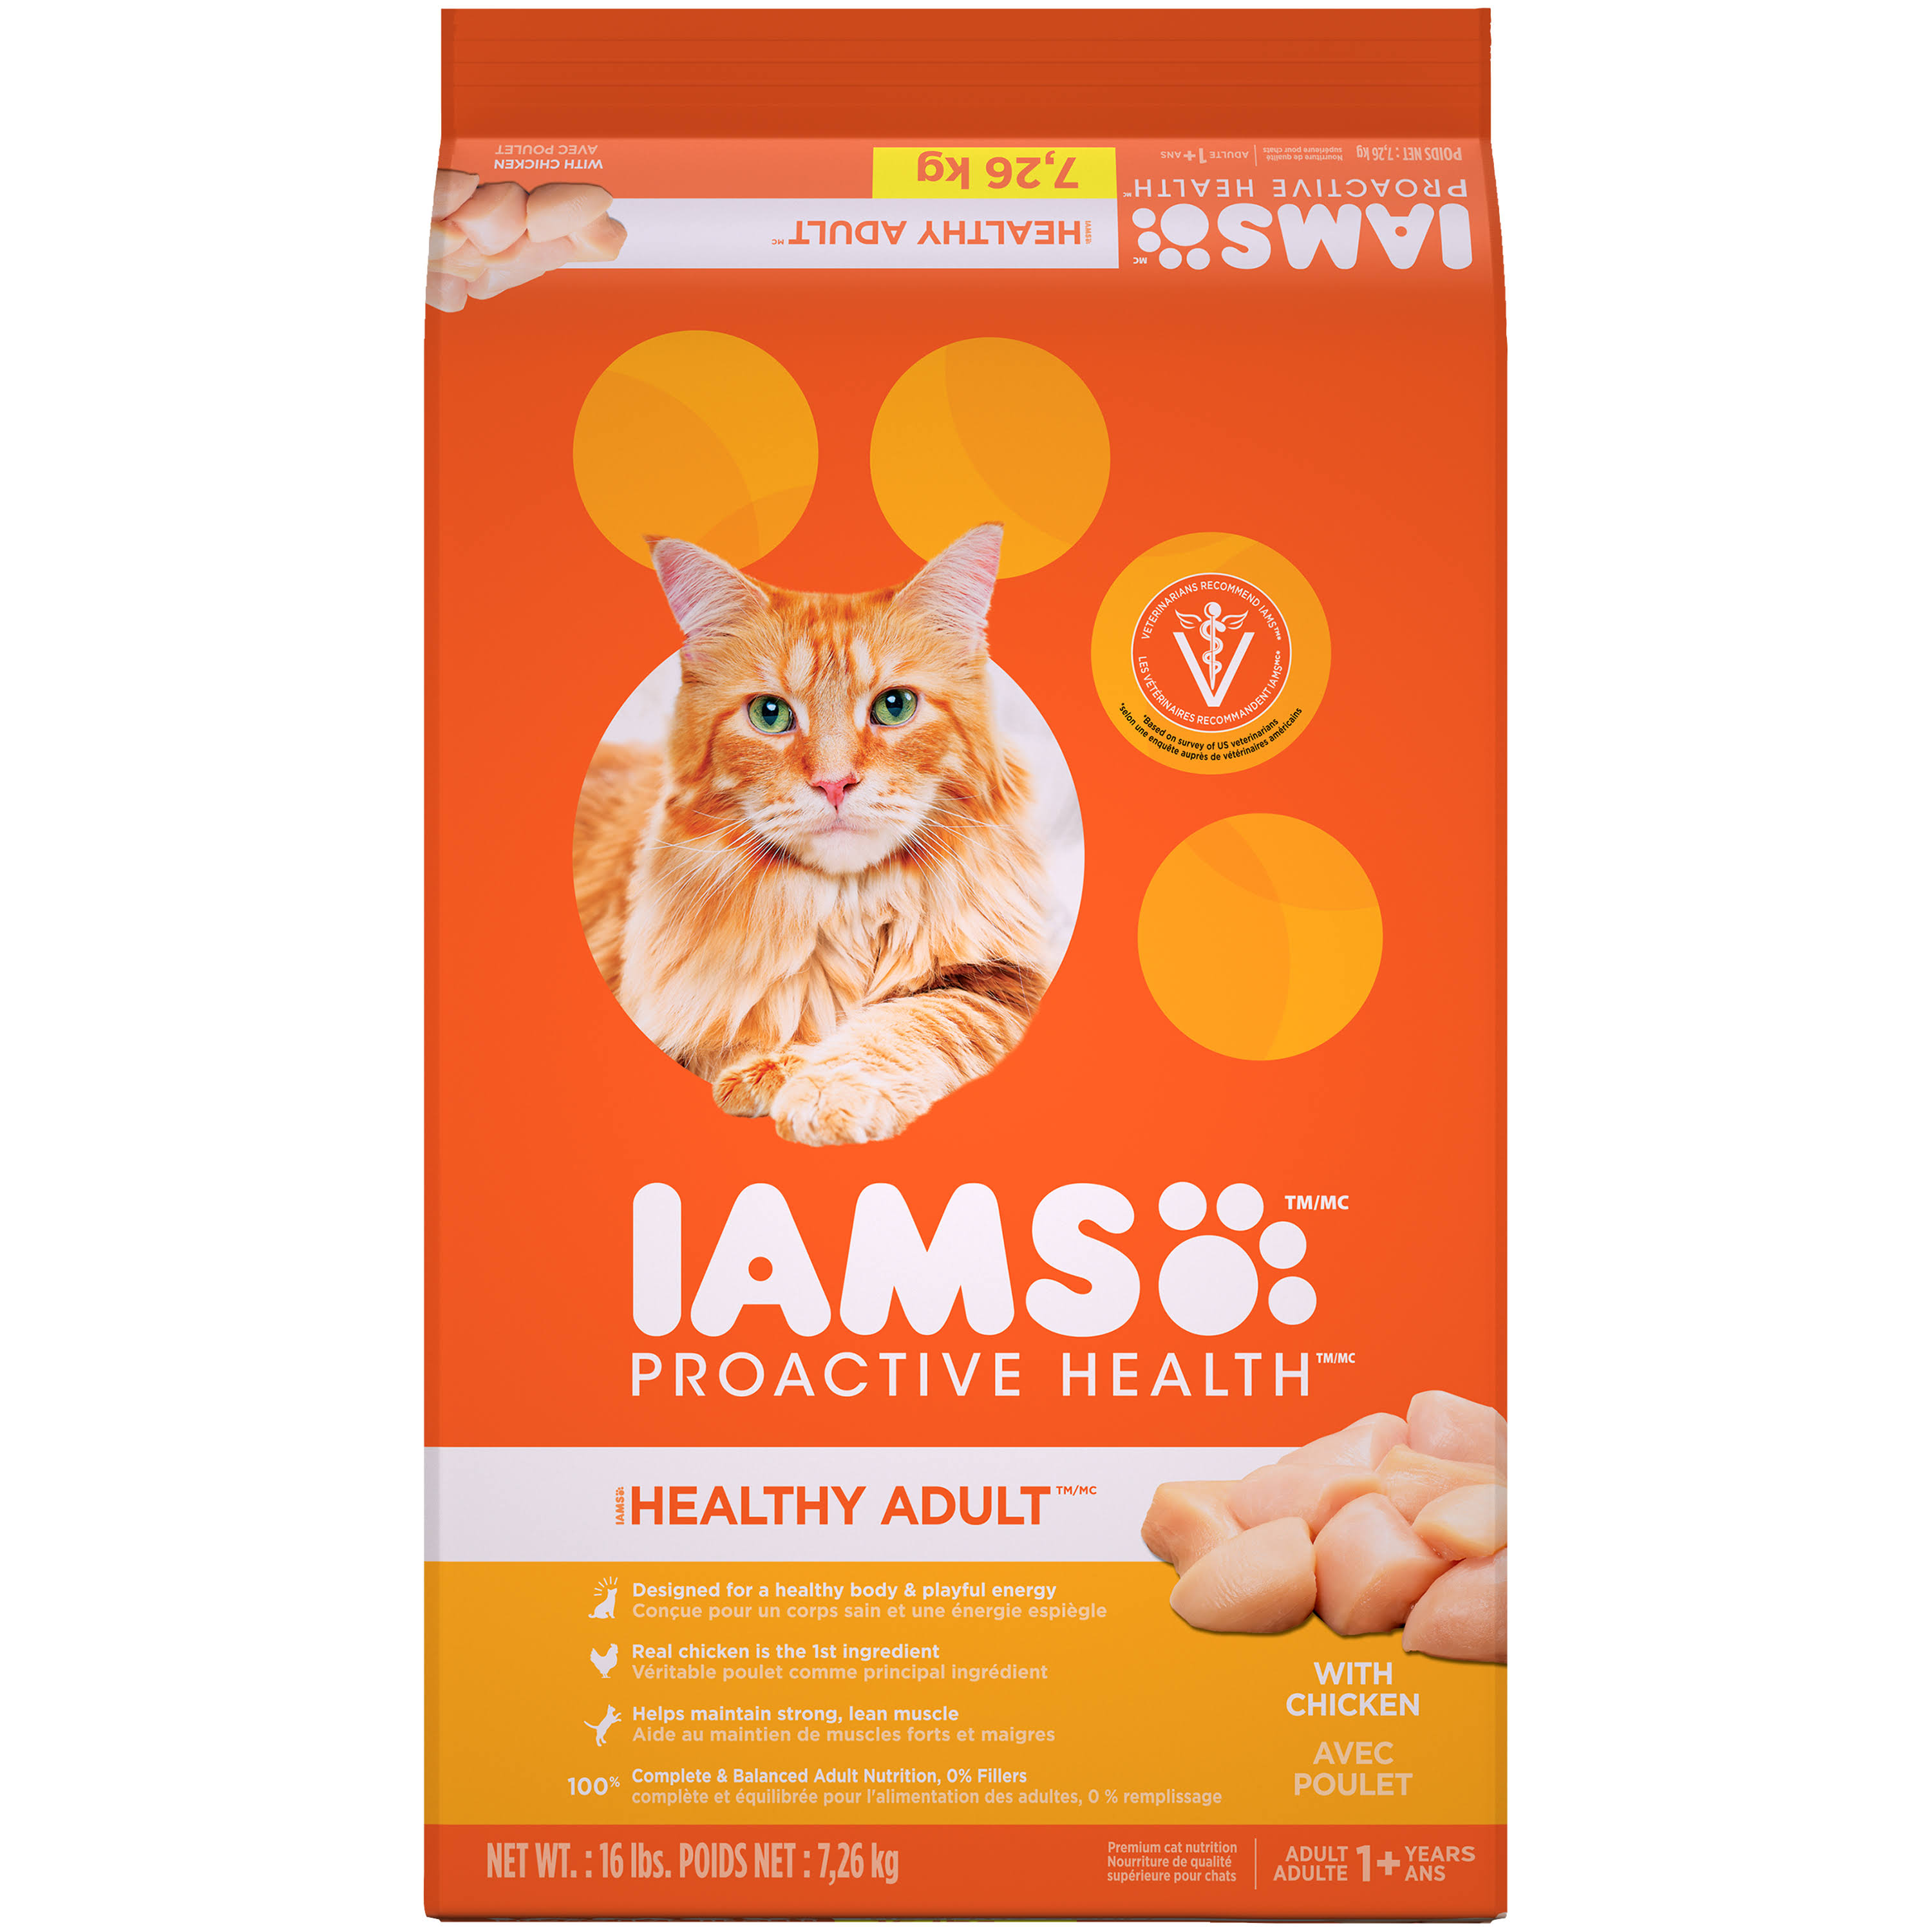 Iams Proactive Health Healthy Adult Original Dry Cat Food - Chicken, 16lbs